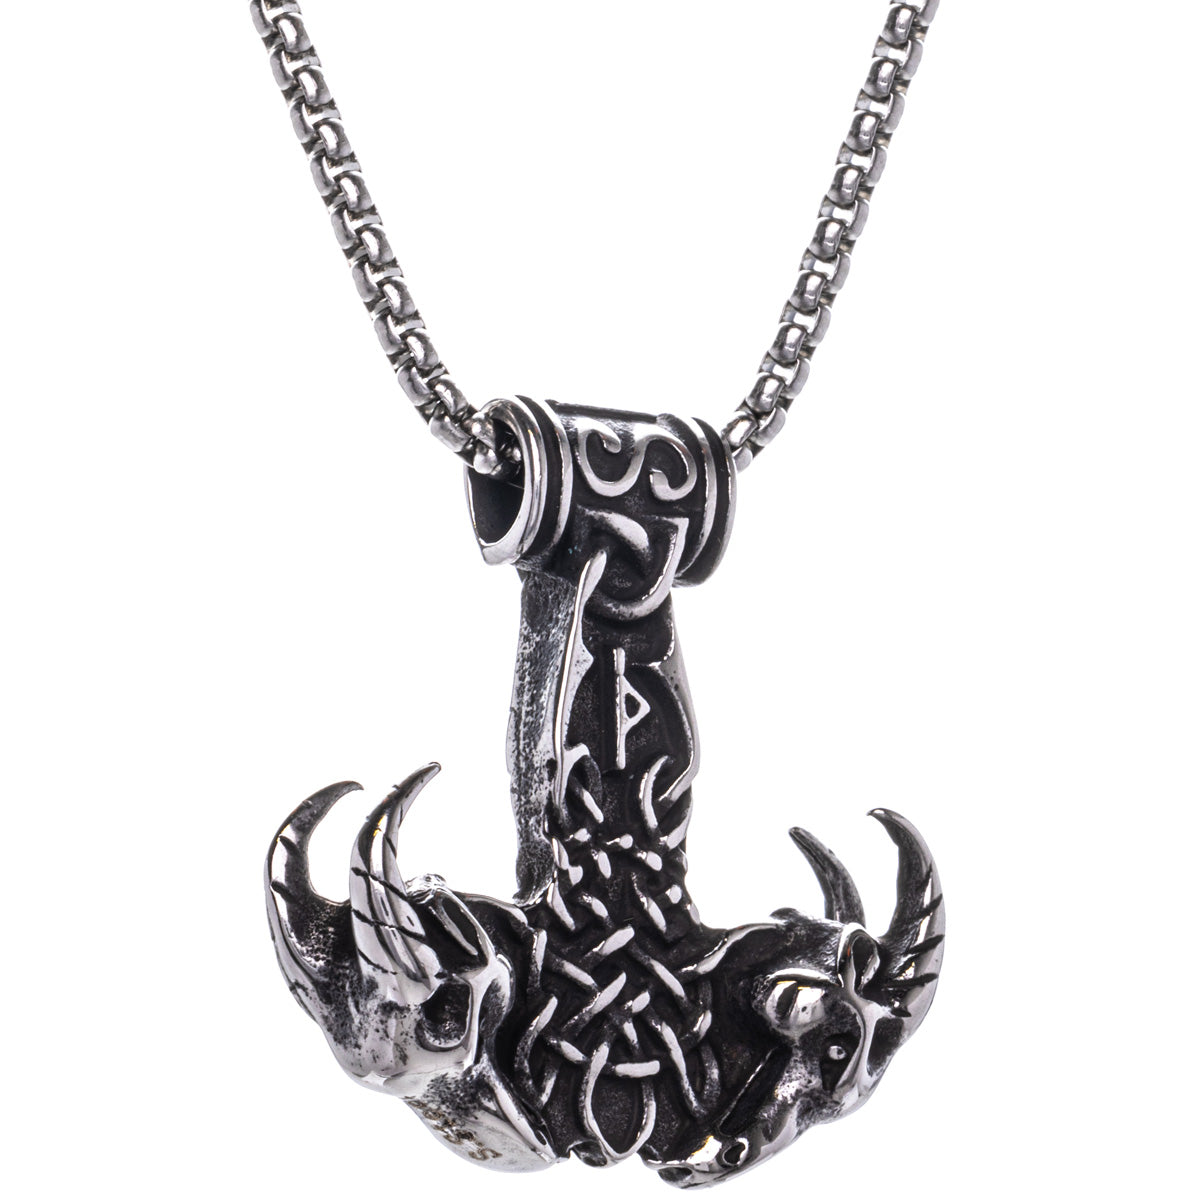 Goat skull Thor's hammer Mjölnir pendant necklace (Steel 316L)